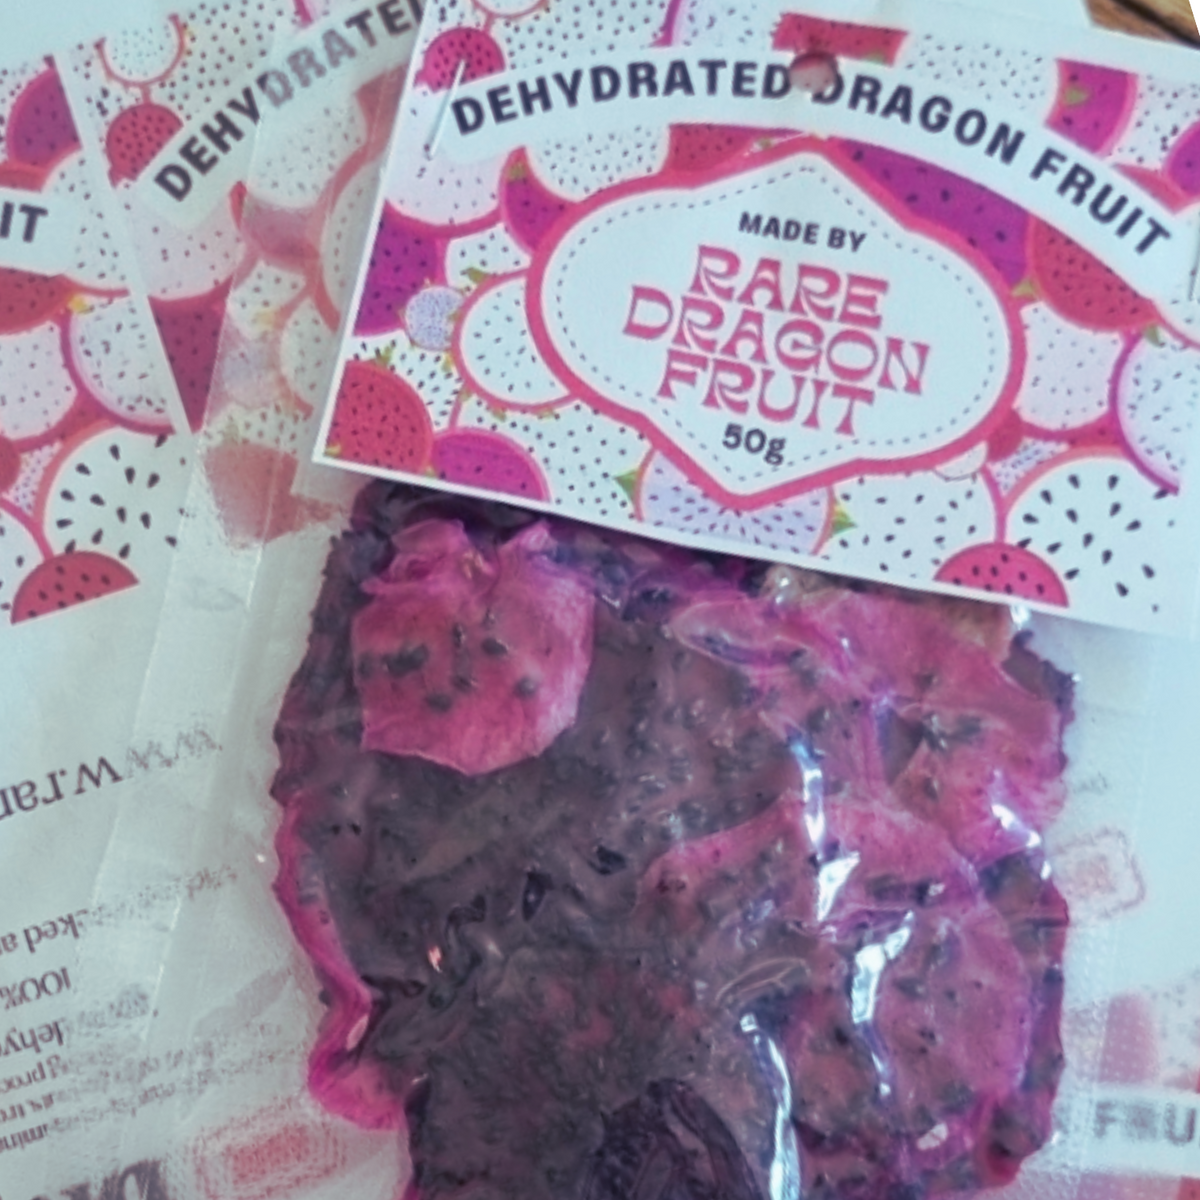 Dehydrated Rare Dragon Fruit 50g